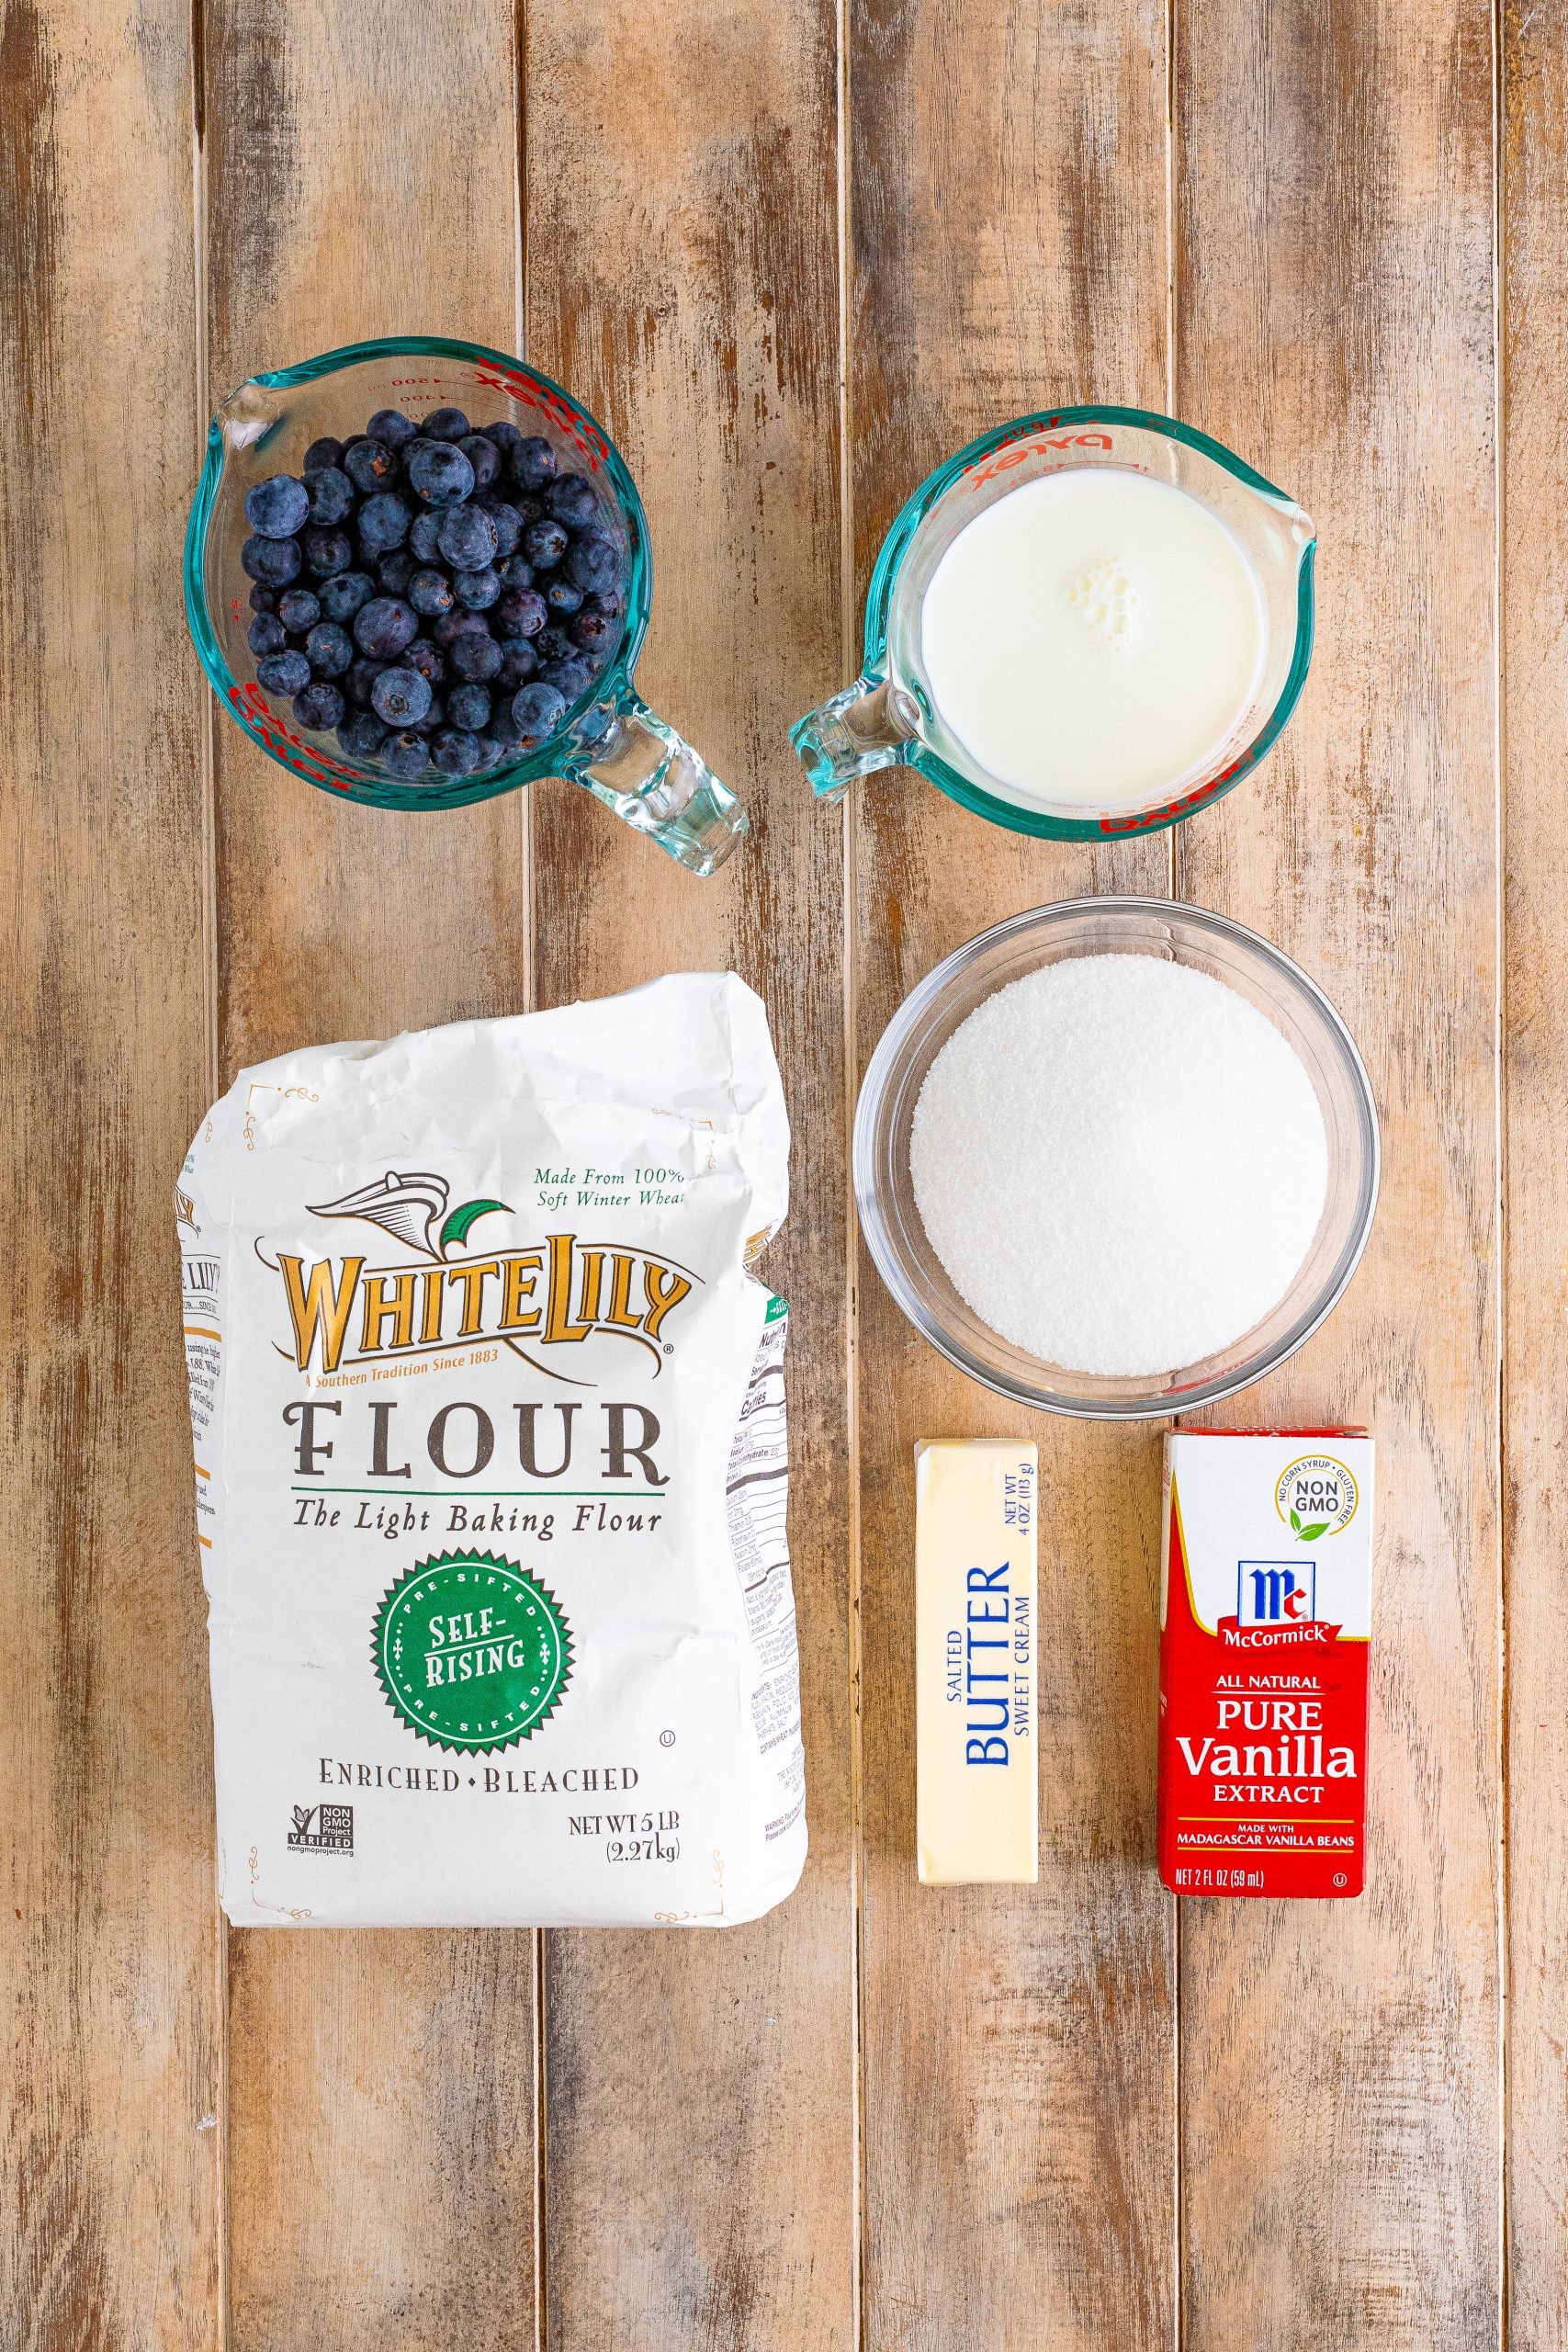 blueberry cobbler ingredients: self-rising flour, sugar, milk, salted butter, vanilla extract, fresh blueberries.
